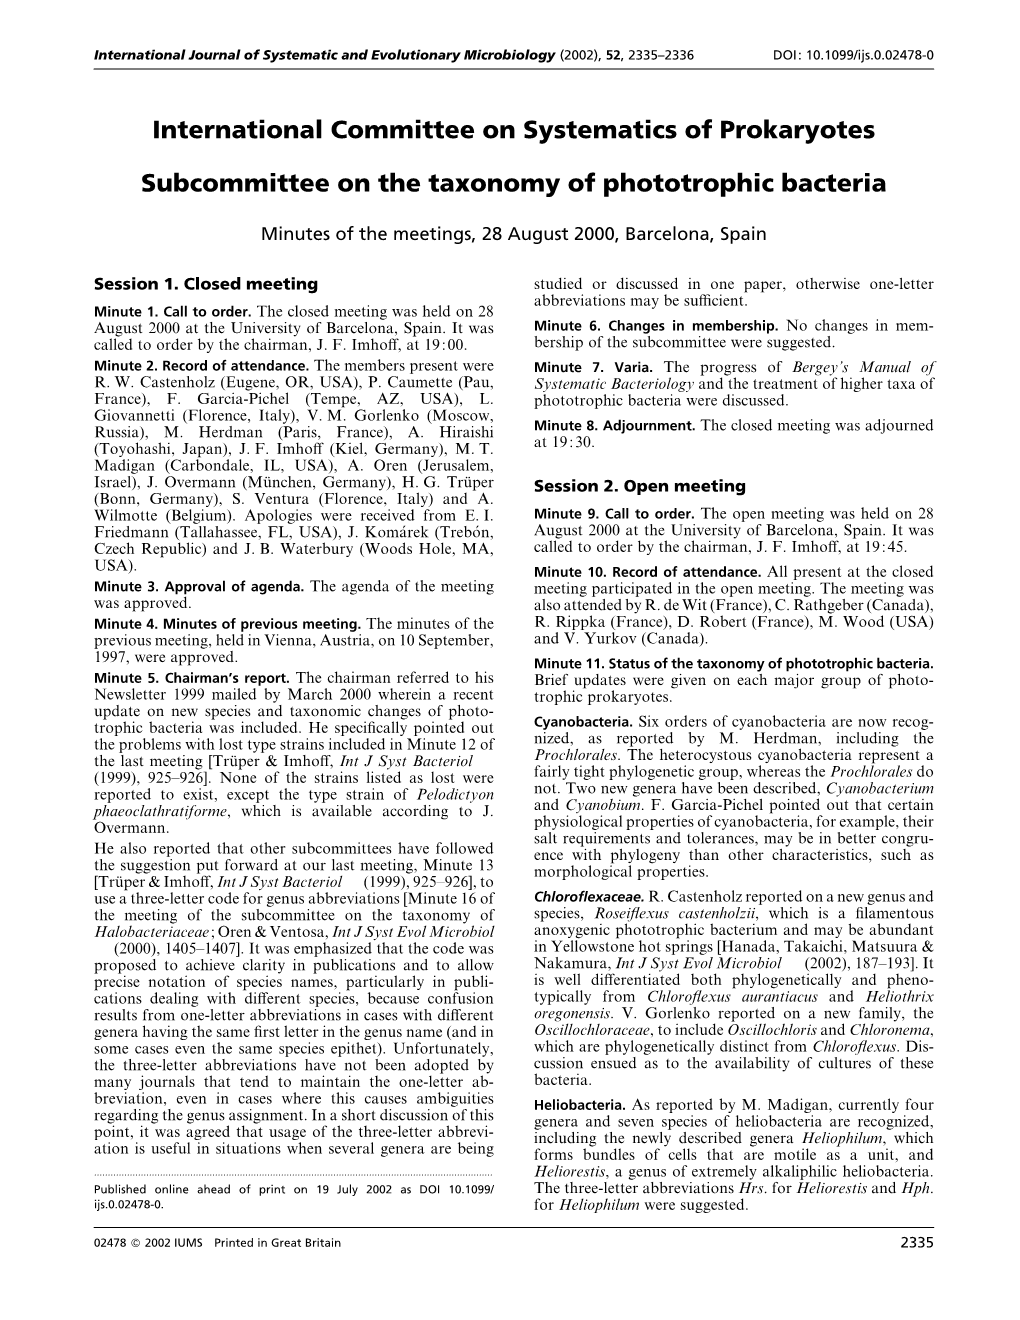 International Committee on Systematics of Prokaryotes